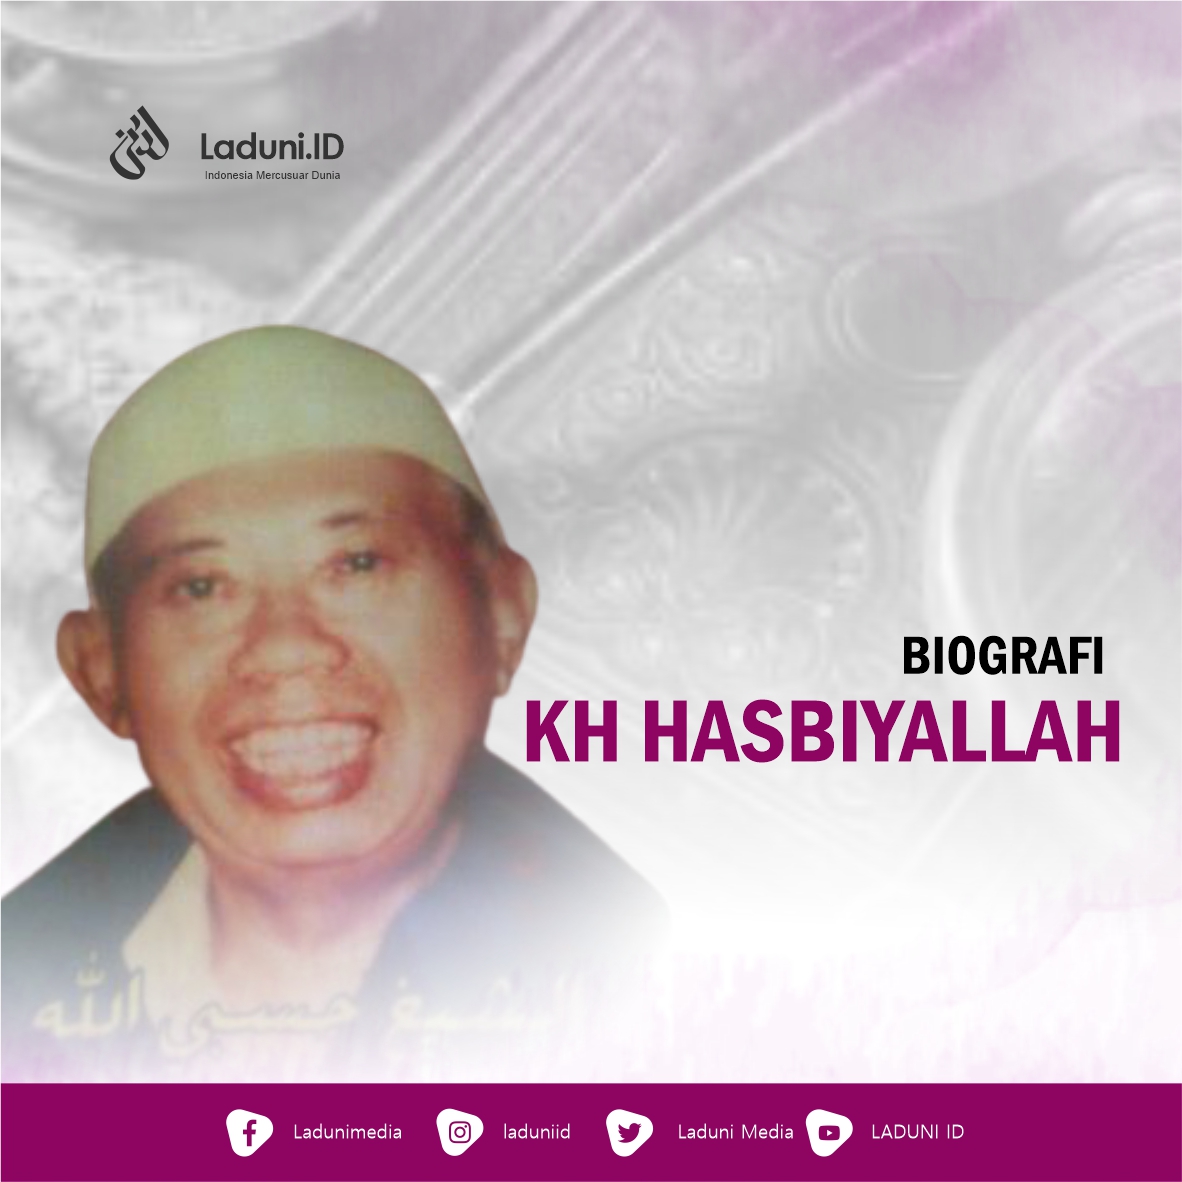 Biografi KH Hasbiyallah